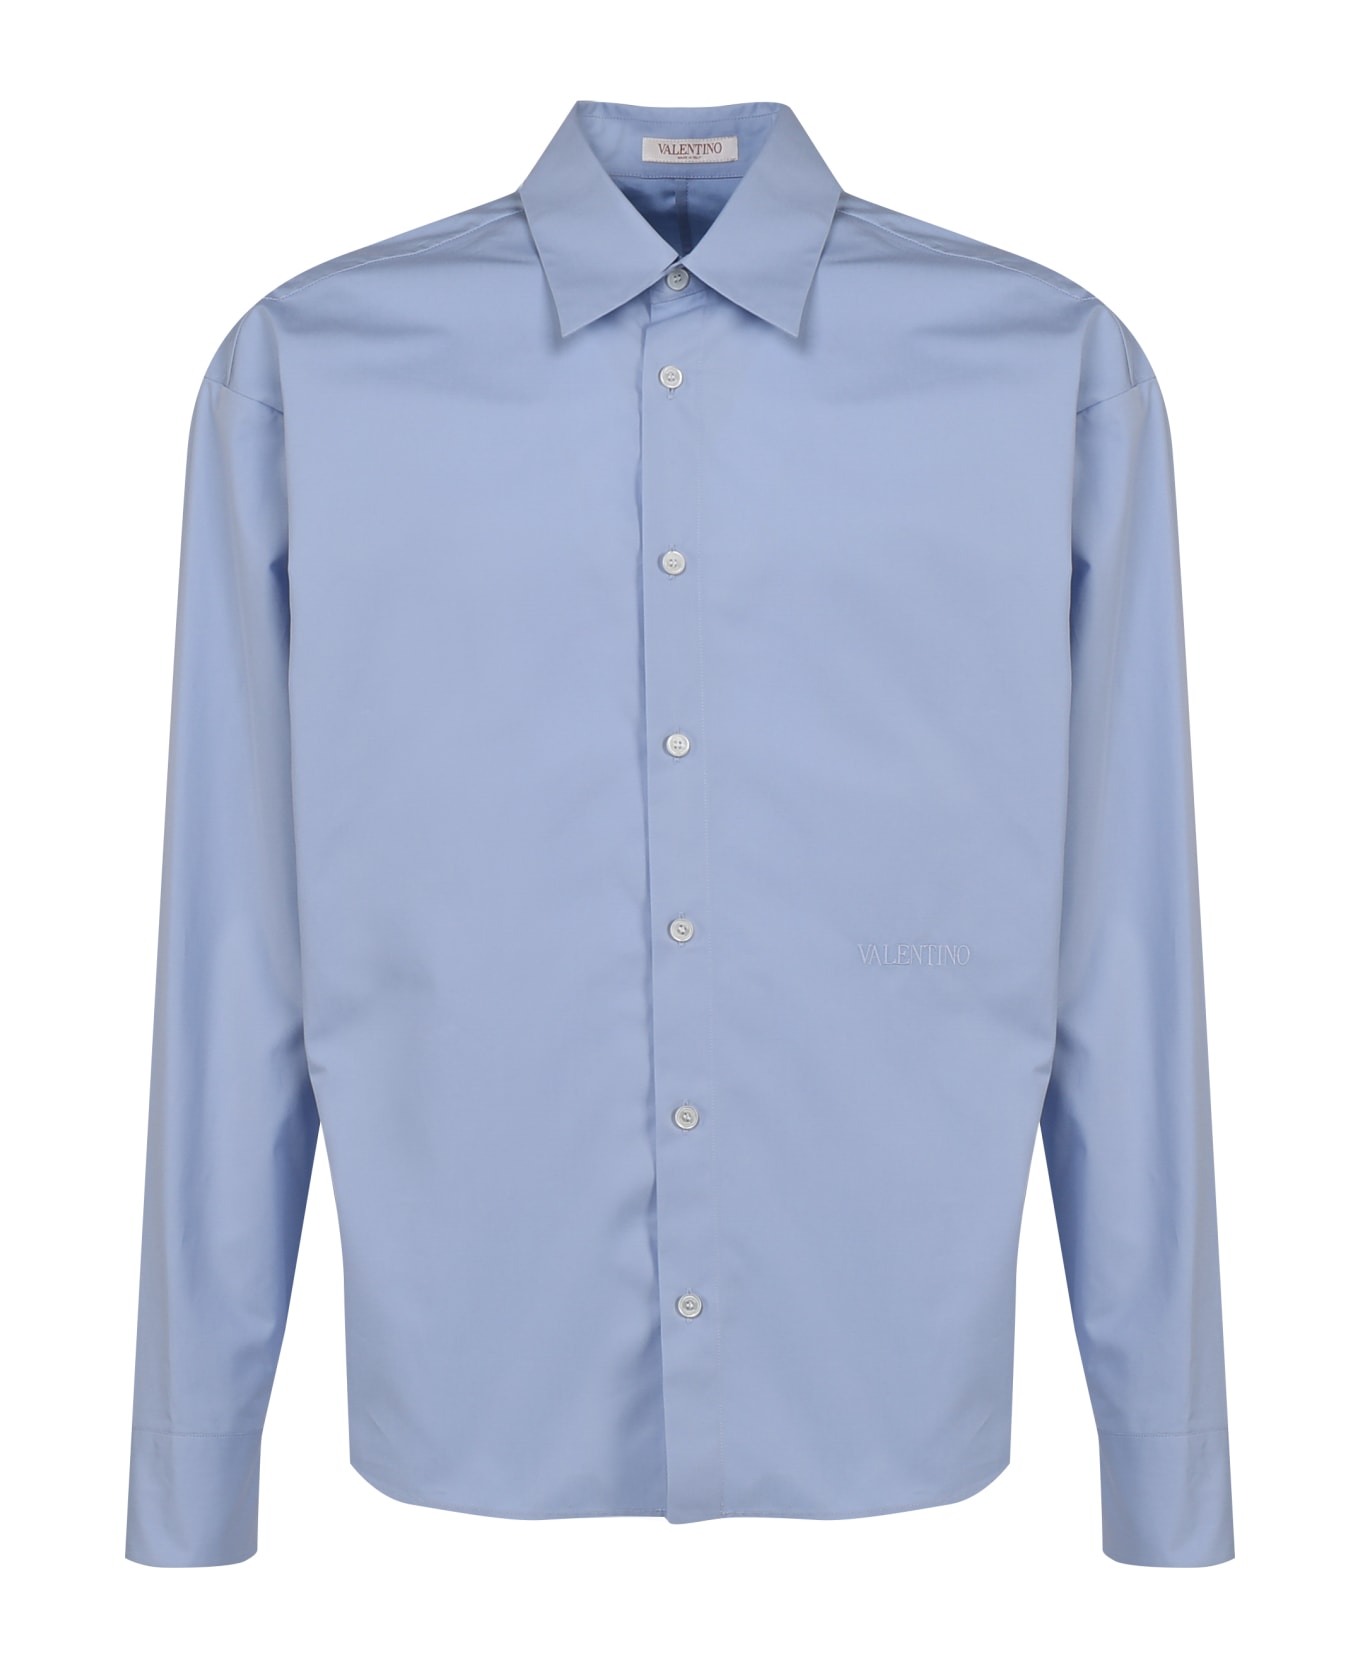 Valentino Garavani Cotton Shirt With Italian Collar - Light blue